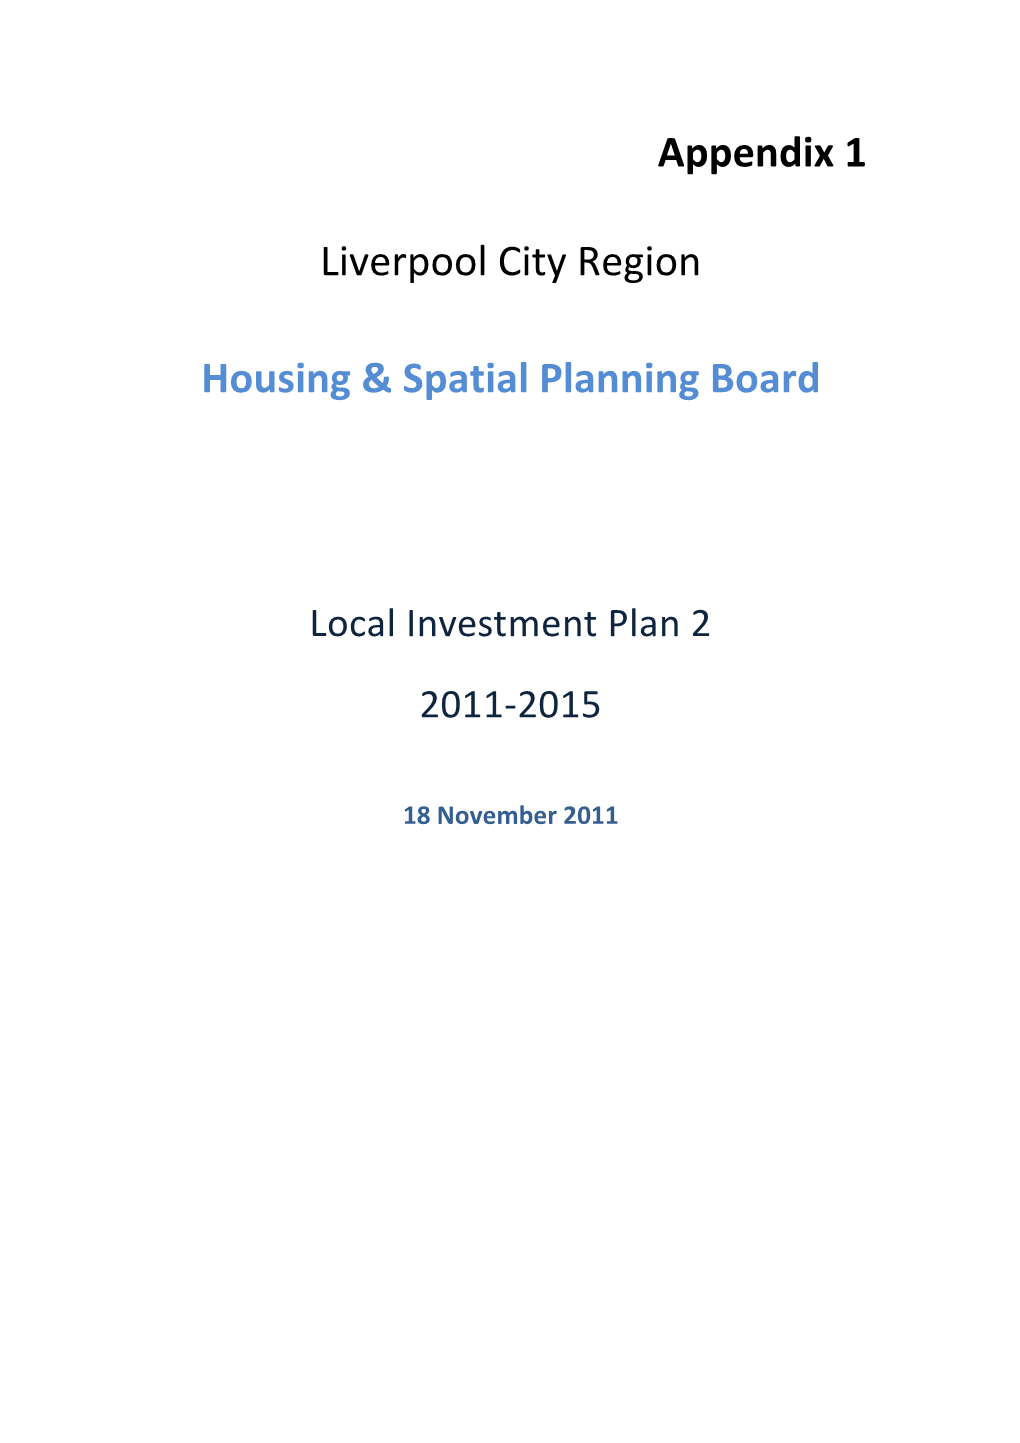 Appendix 1 Liverpool City Region Housing & Spatial Planning Board